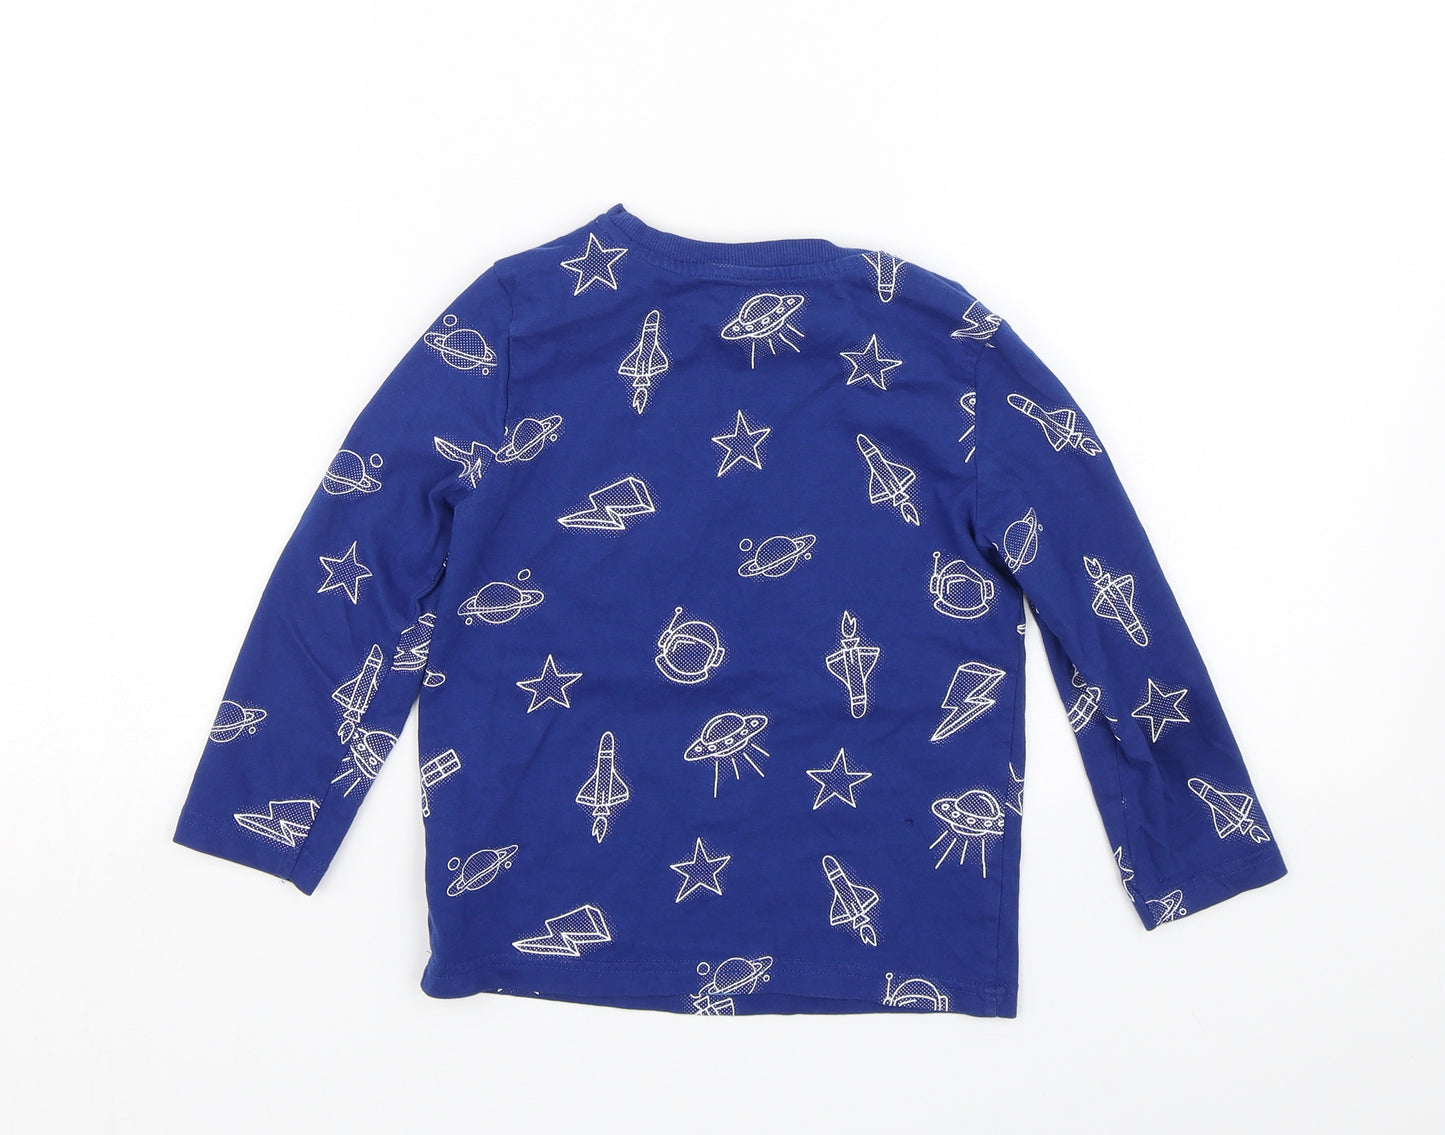 F&F Boys Blue Geometric   Pyjama Top Size 4-5 Years  - Space